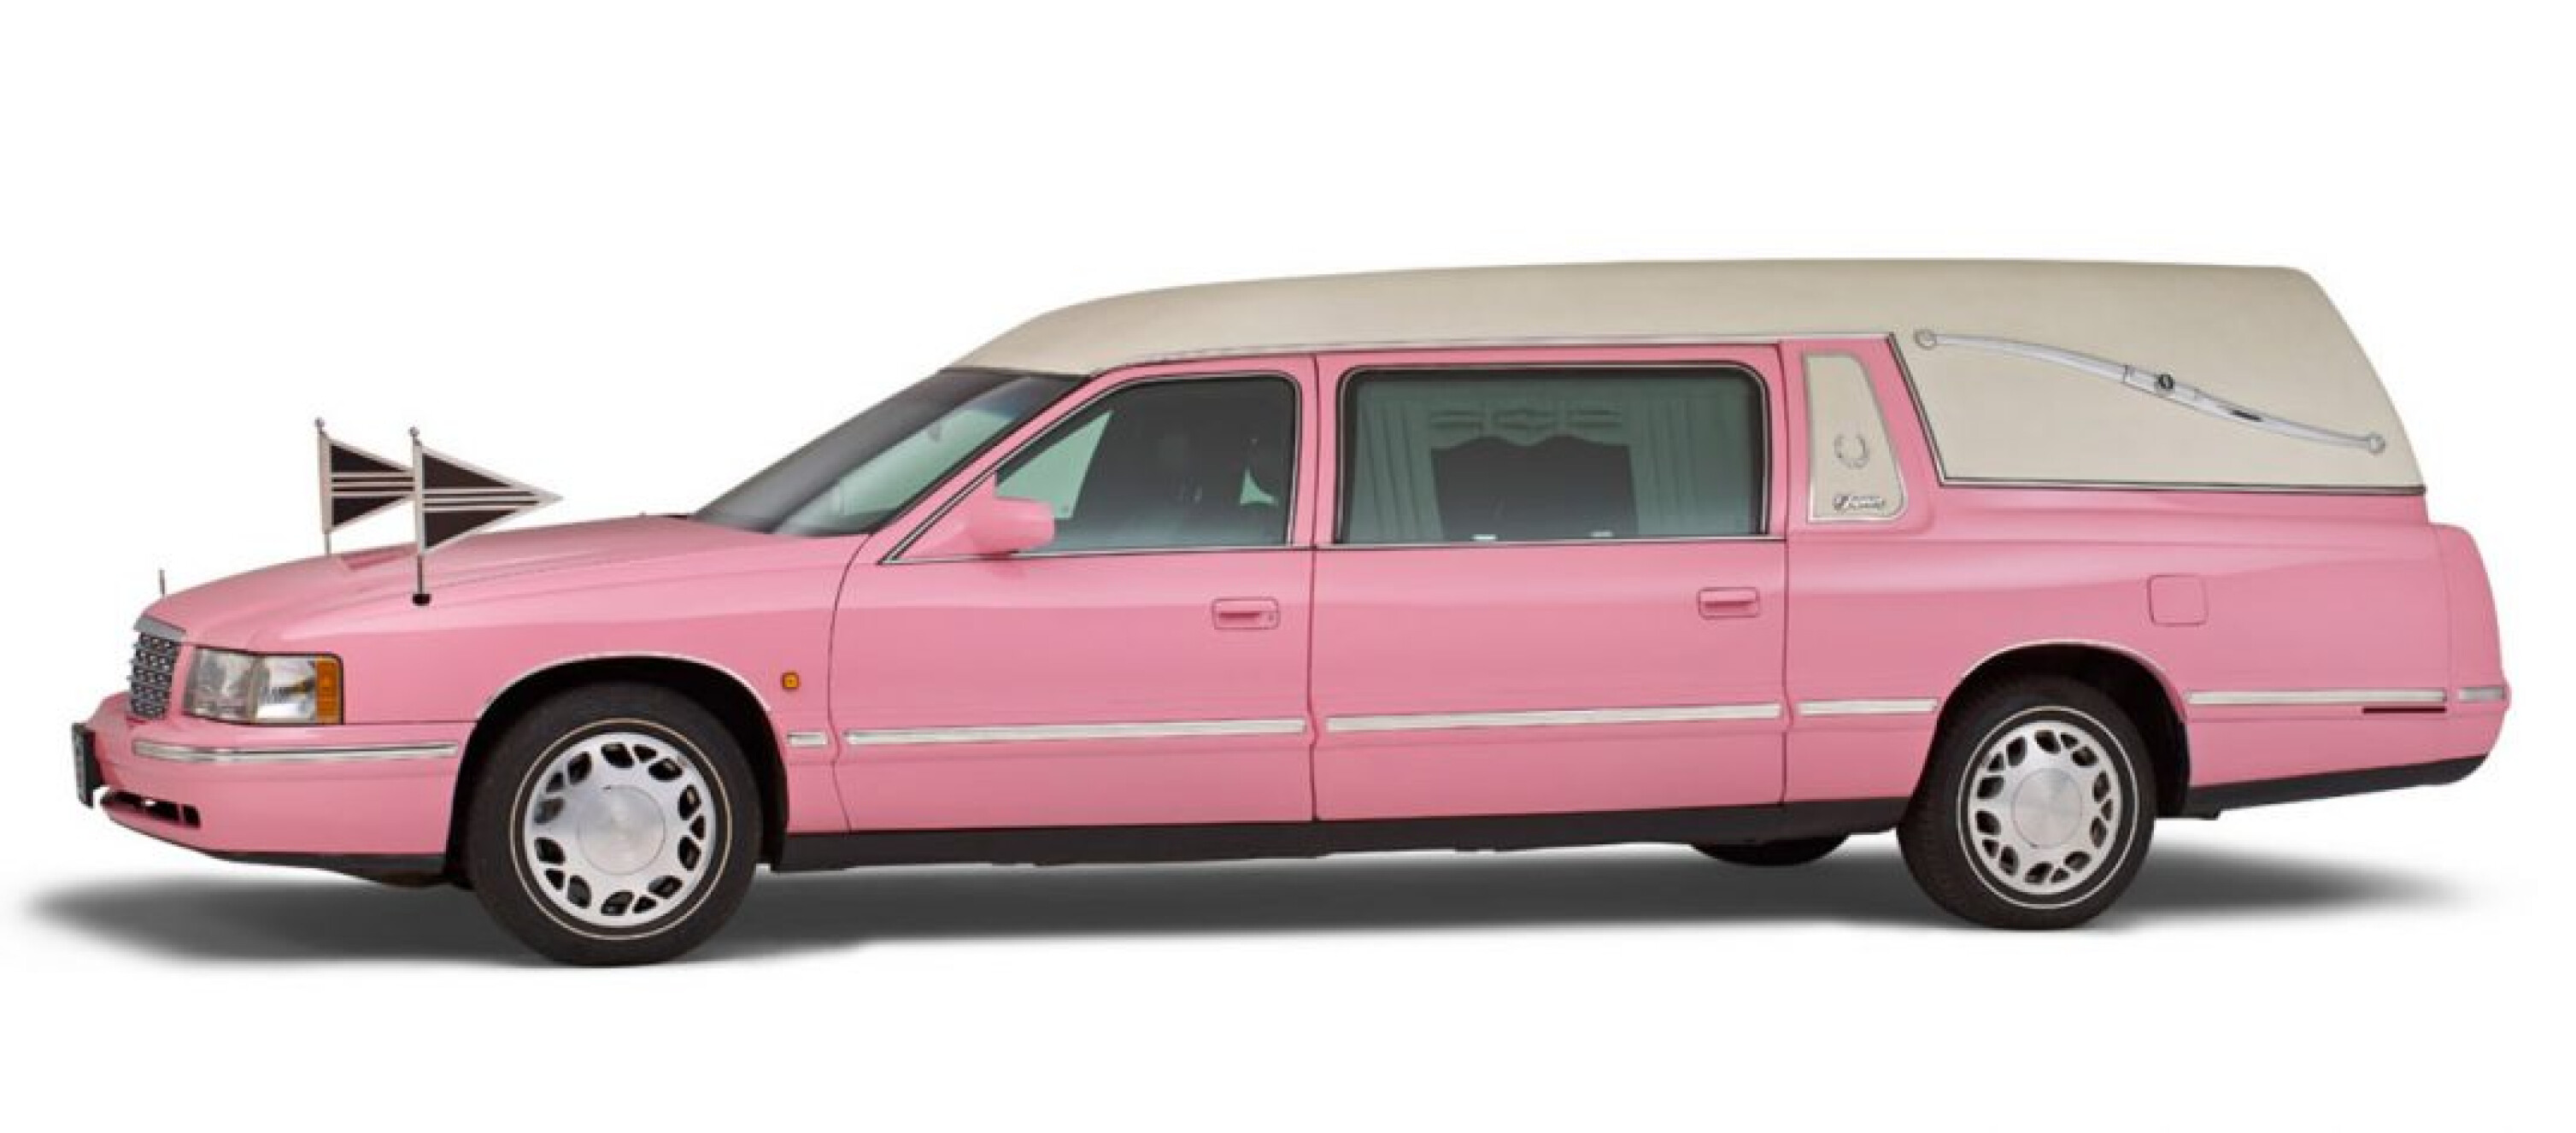 Cadillac-roze-Landaulet-rouwauto-1080x475-1.jpg